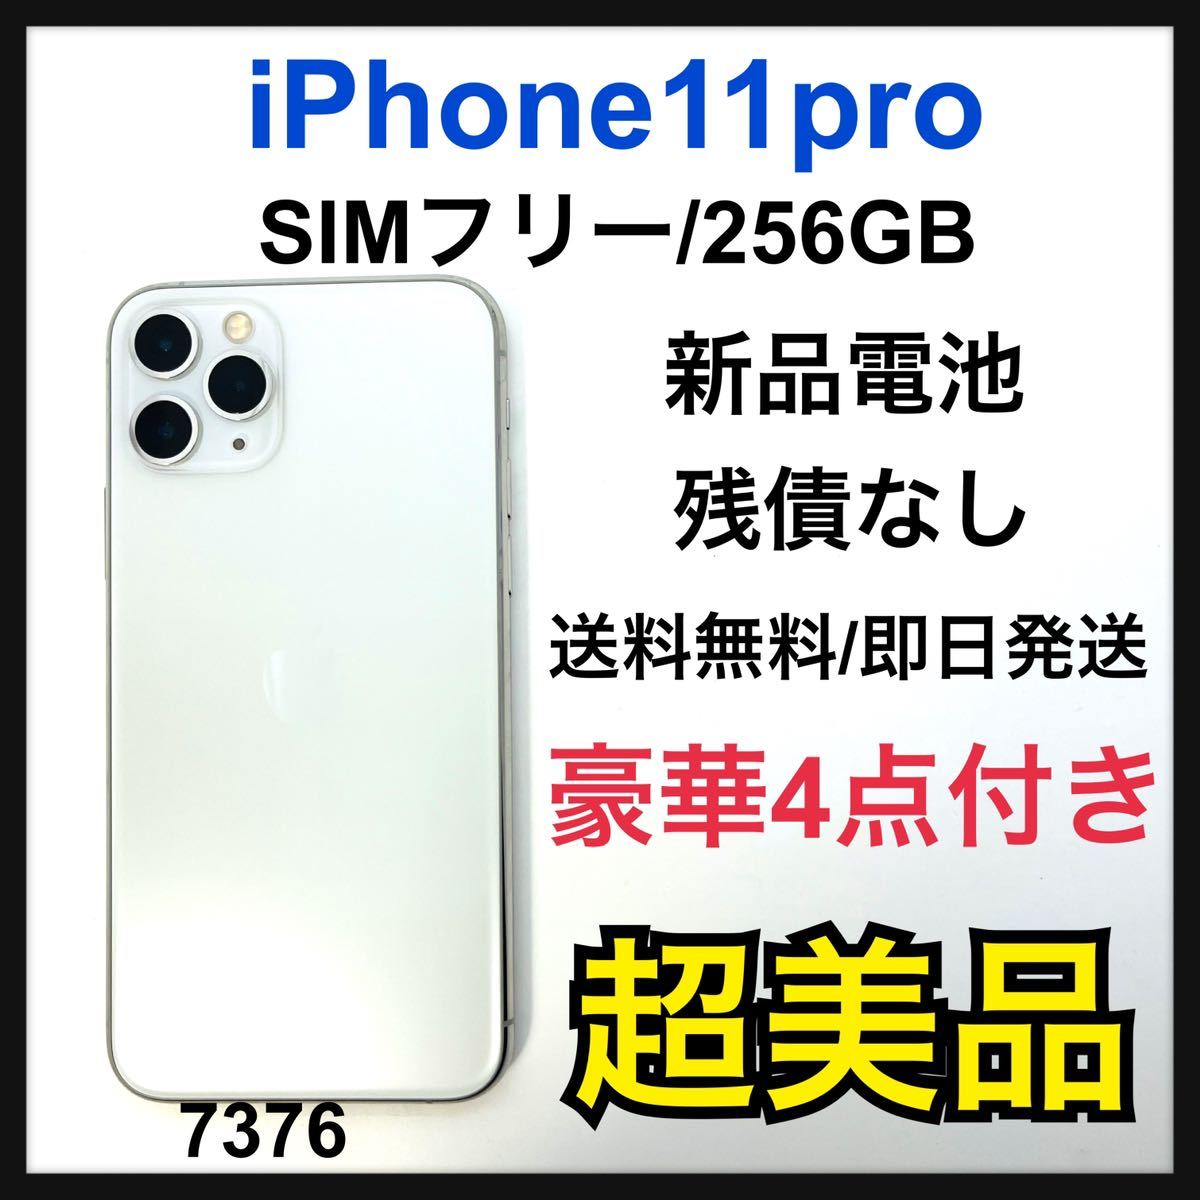 S iPhone 11 pro 256 GB SIMフリー Silver 本体-